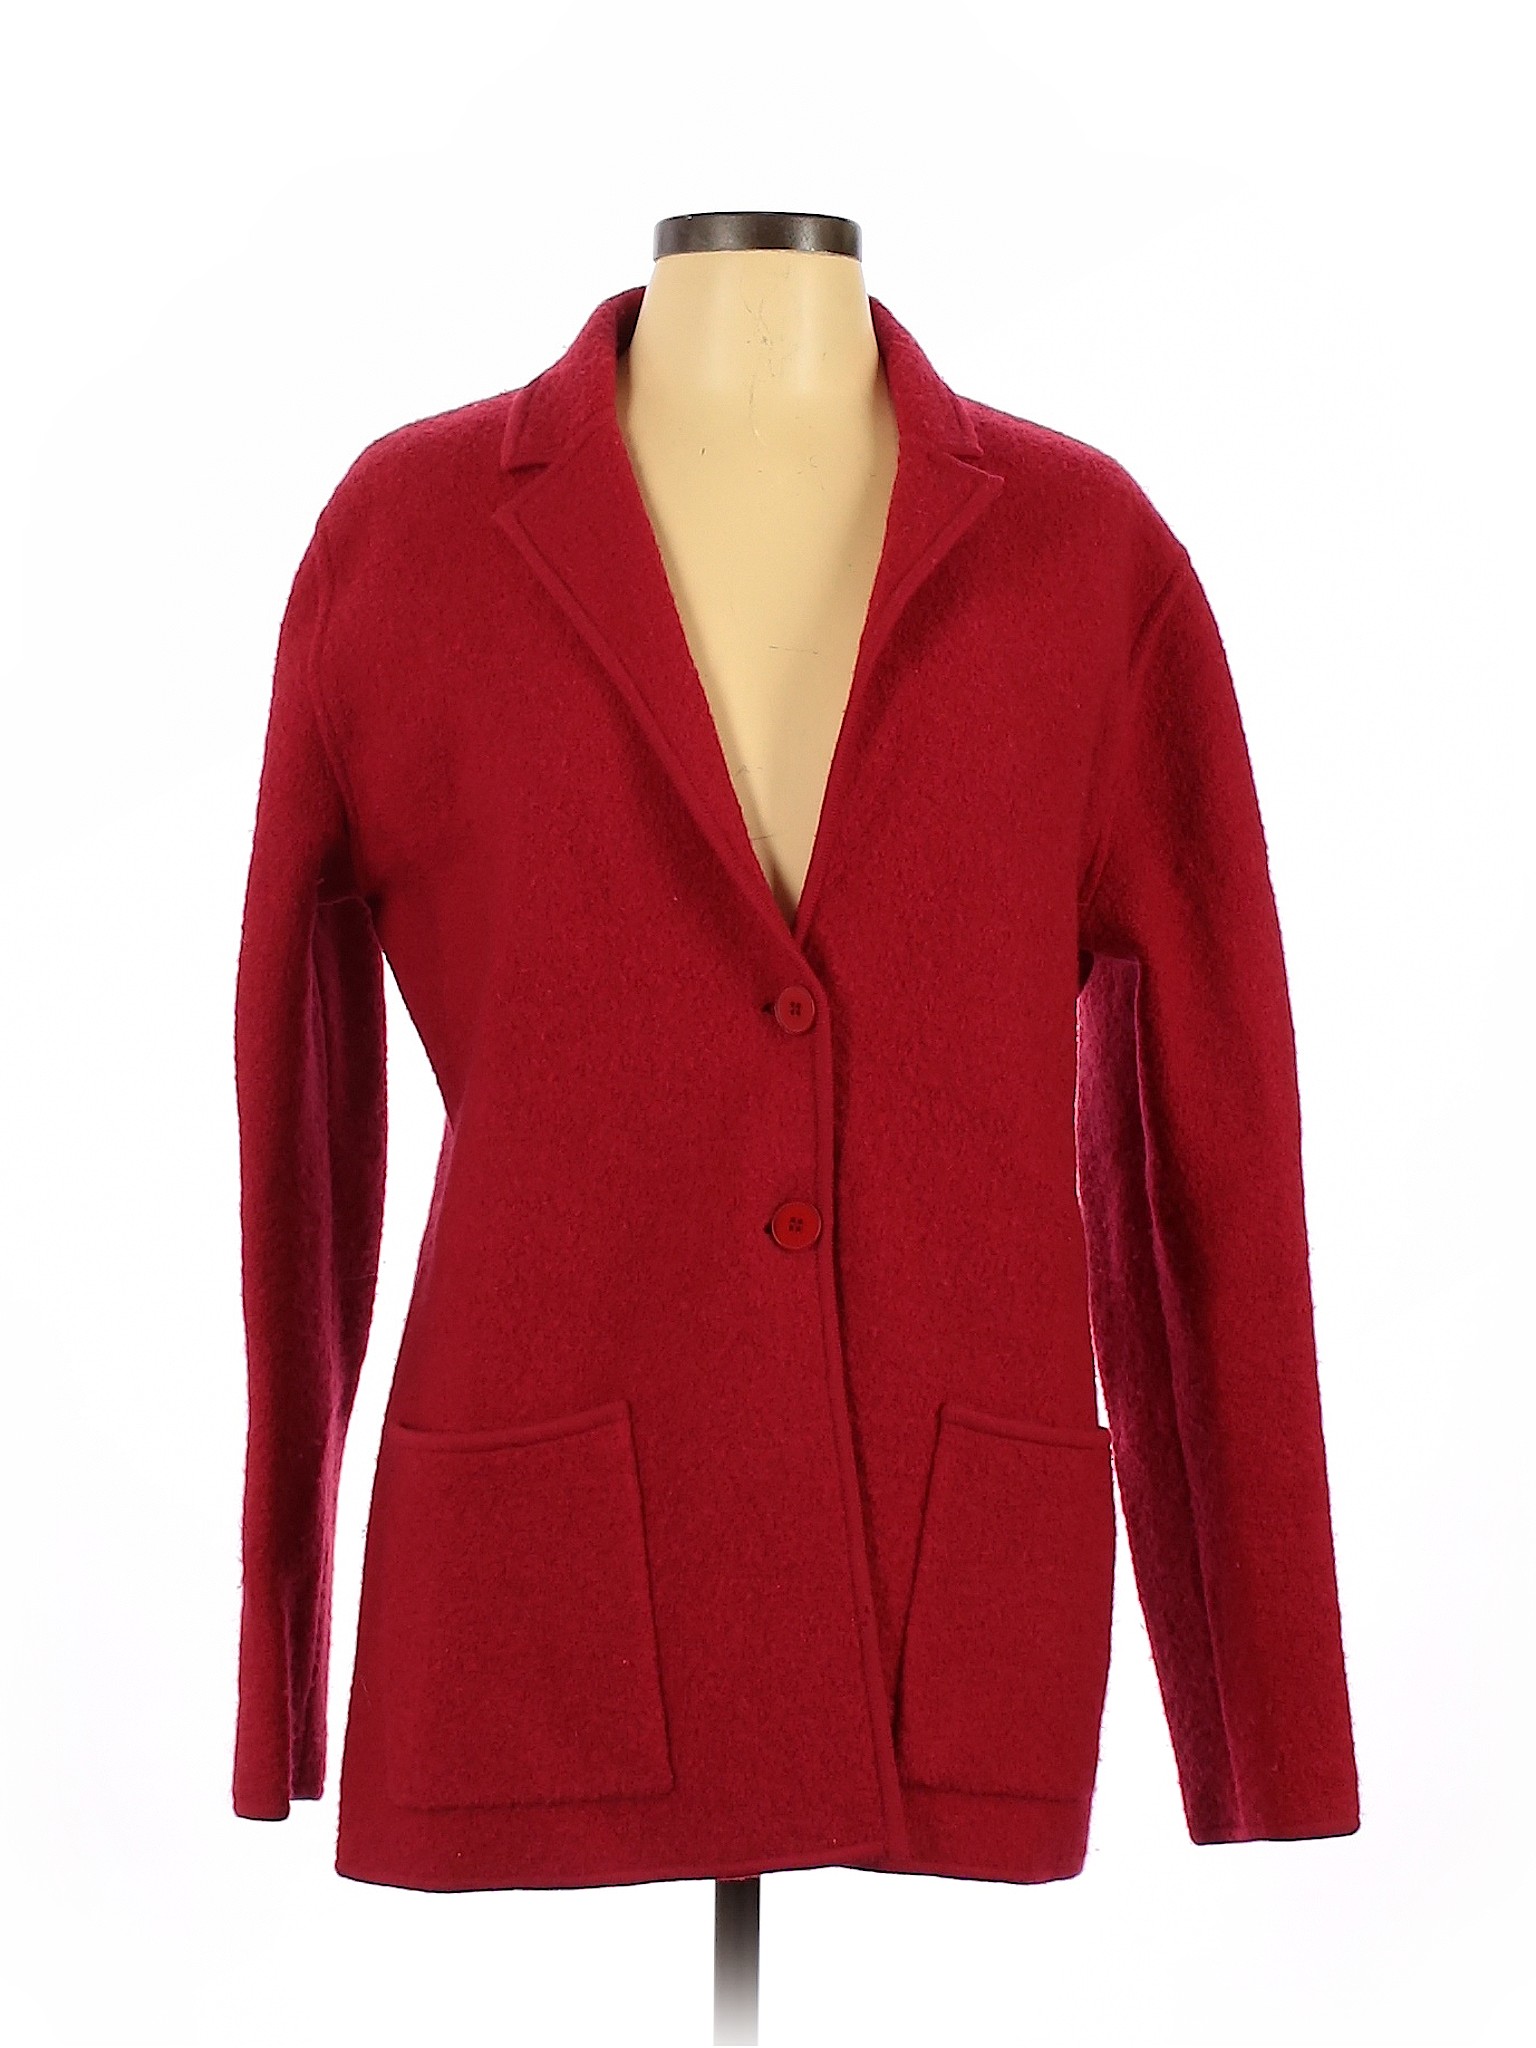 Evan Picone Women Red Wool Blazer L | eBay